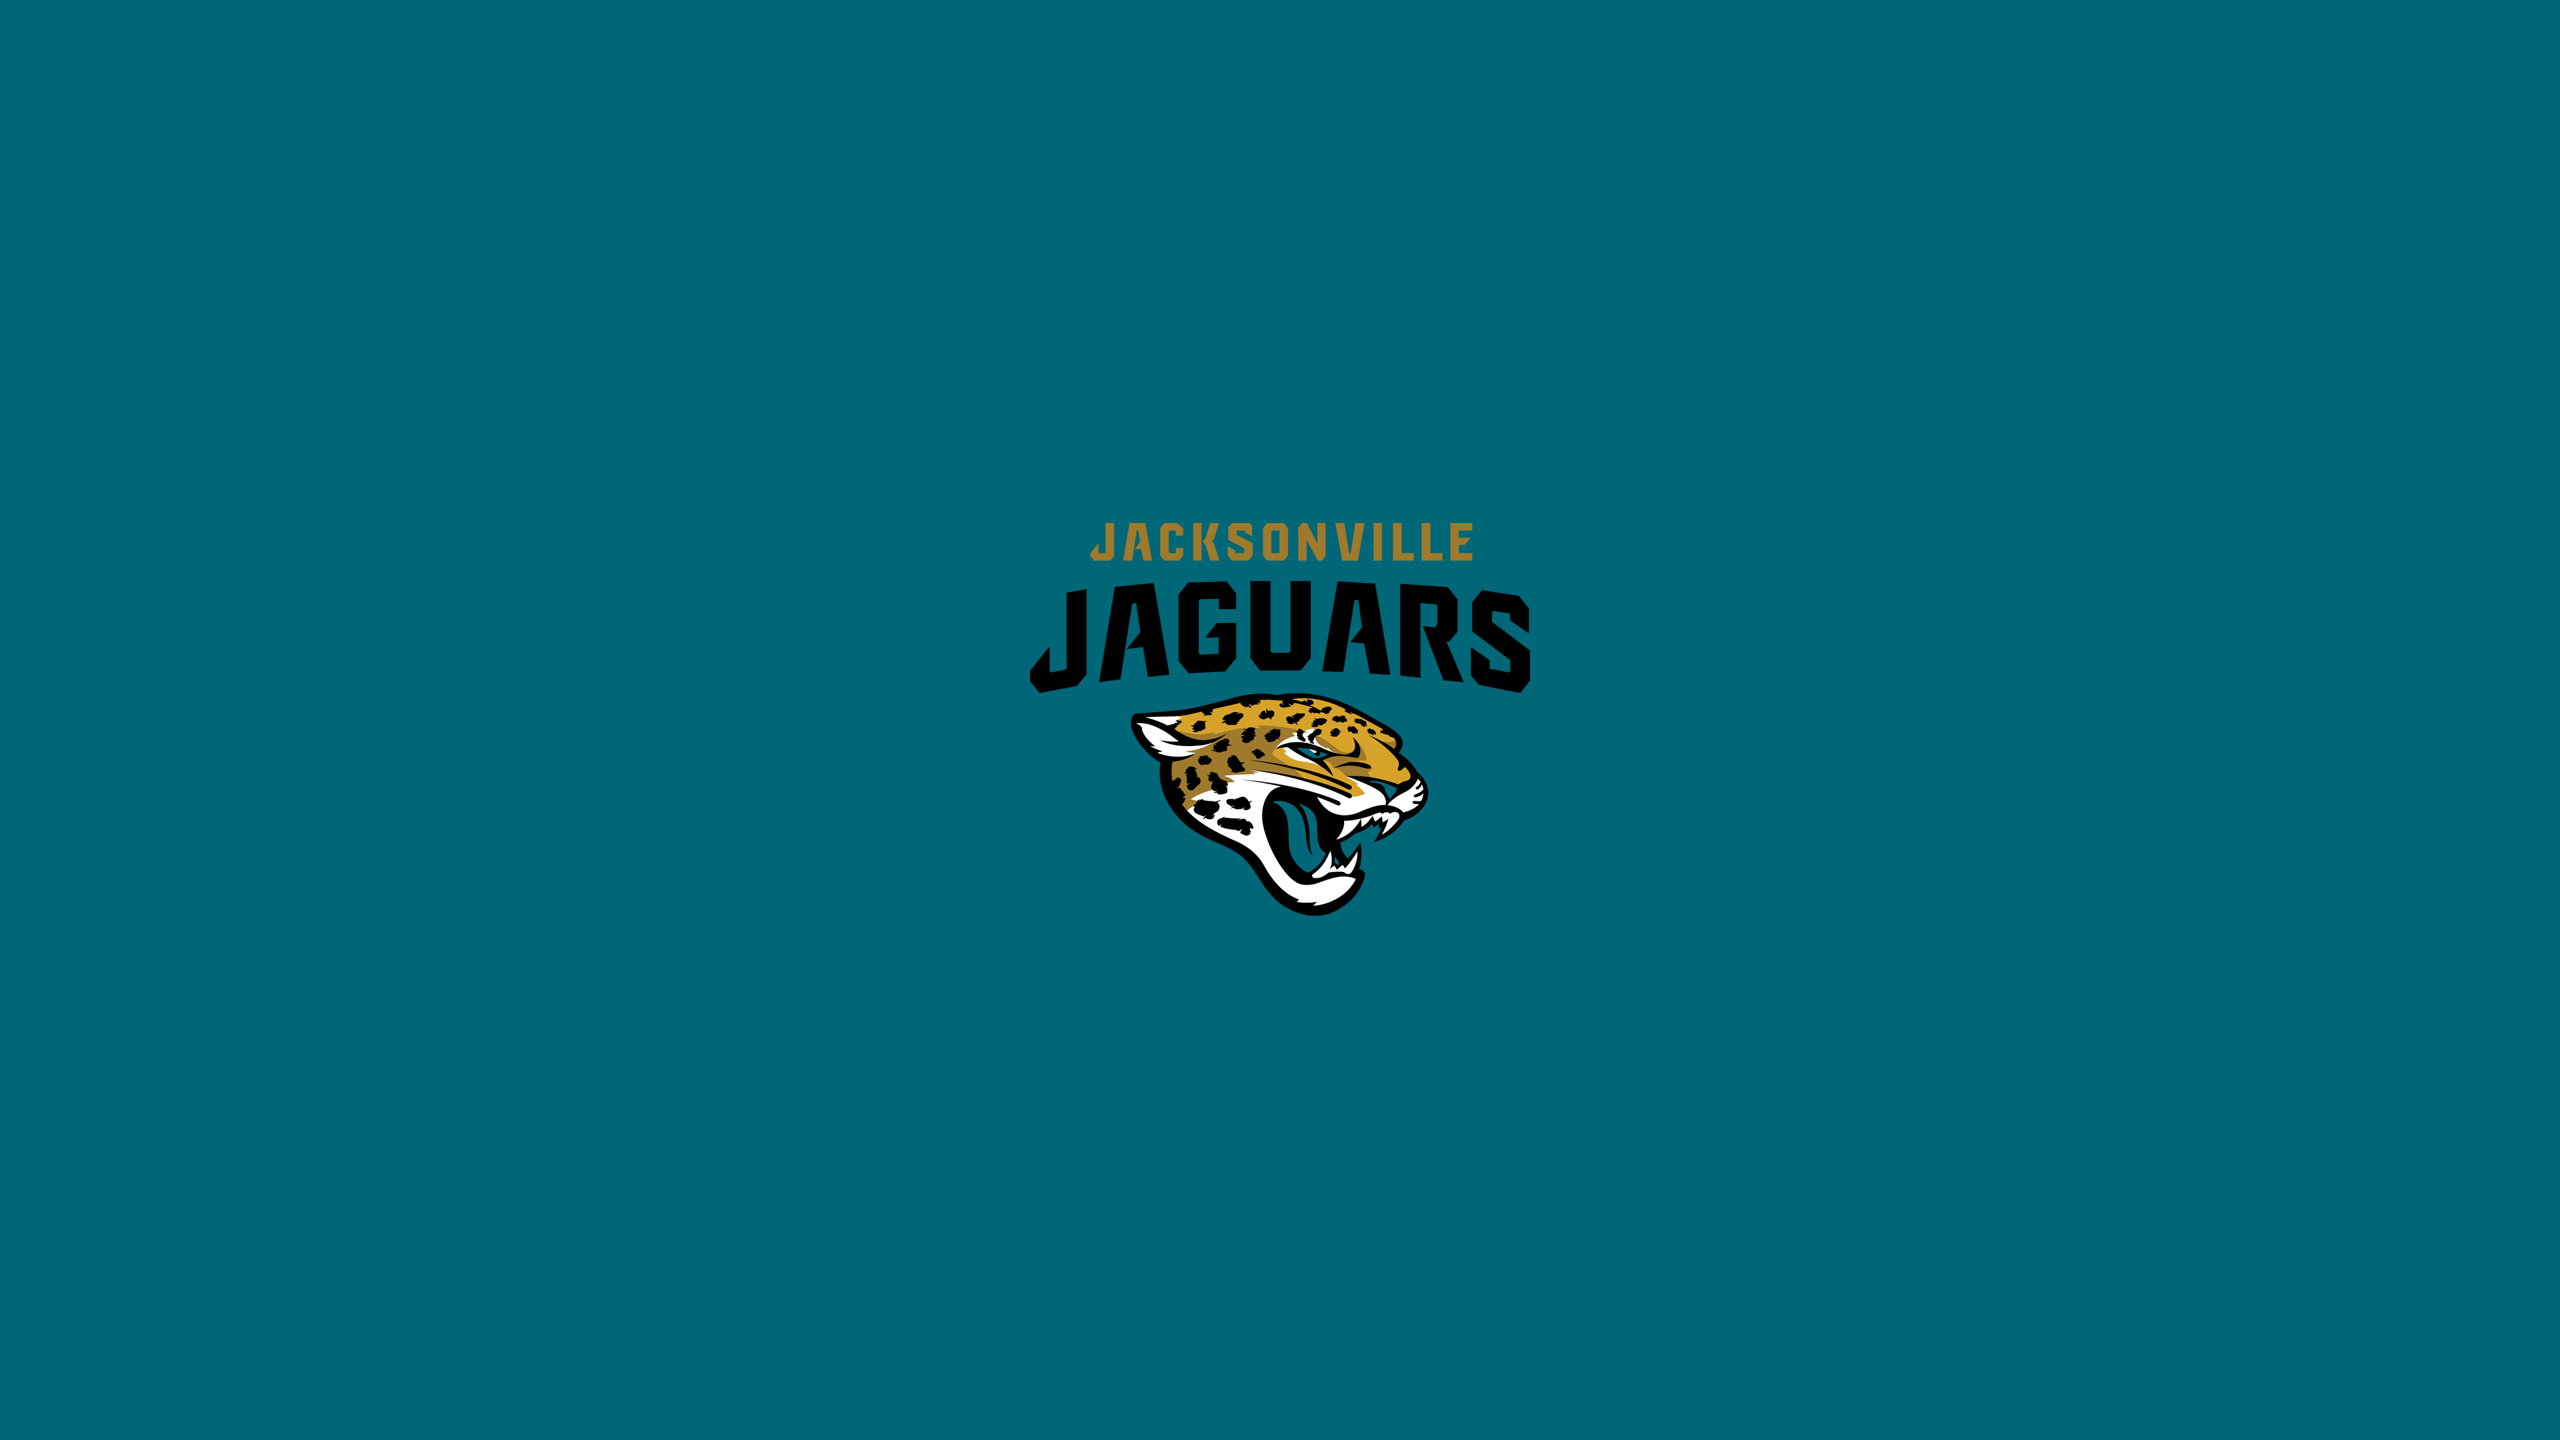 Free Download Jacksonville Jaguars Wallpaper 14507 25601440